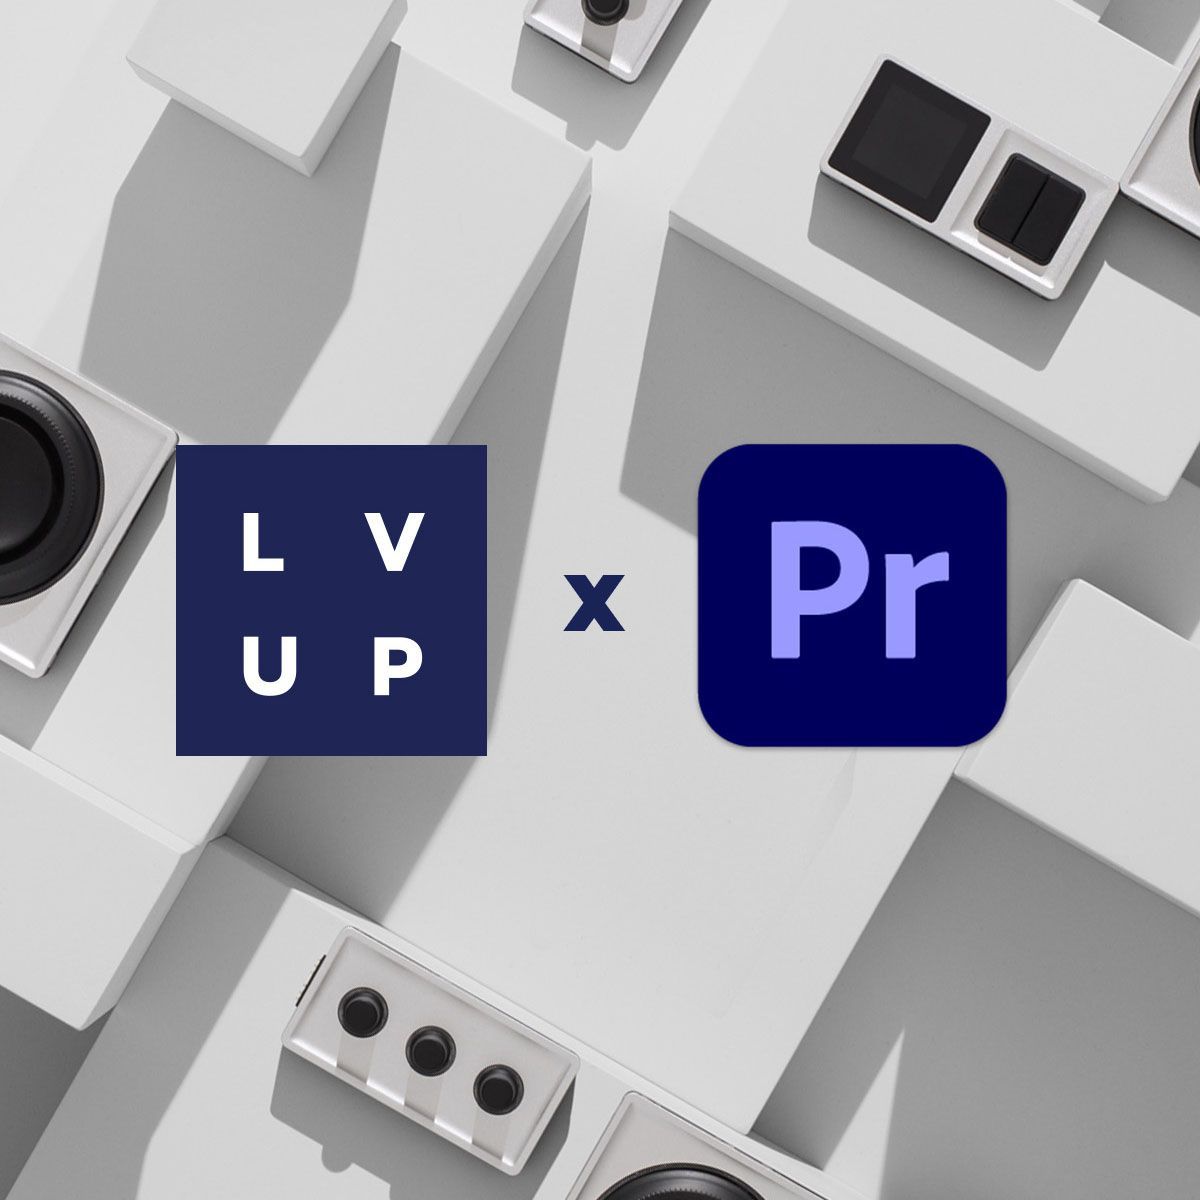 LV UP with Monogram: Adobe Premiere Pro